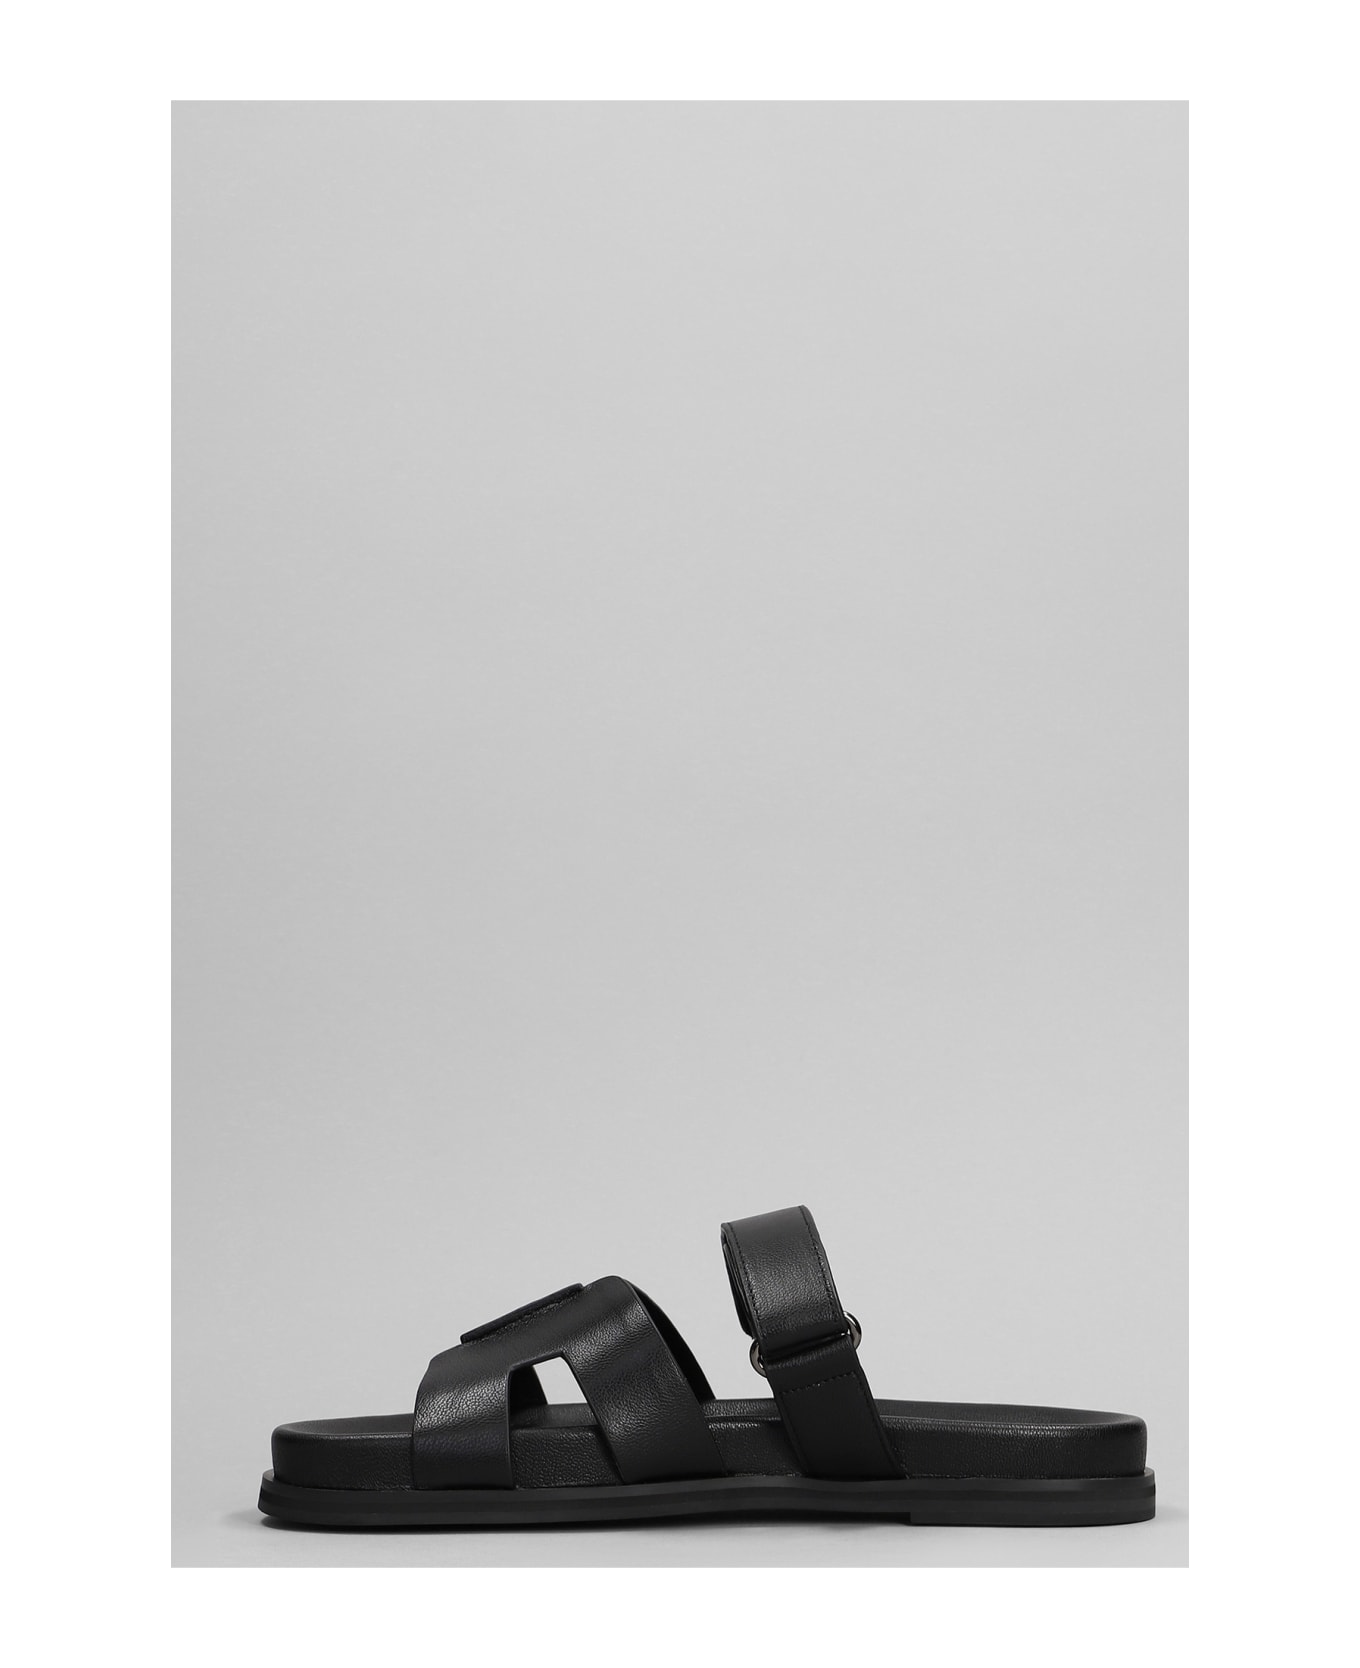 Bibi Lou Mindy Flats In Black Leather - black